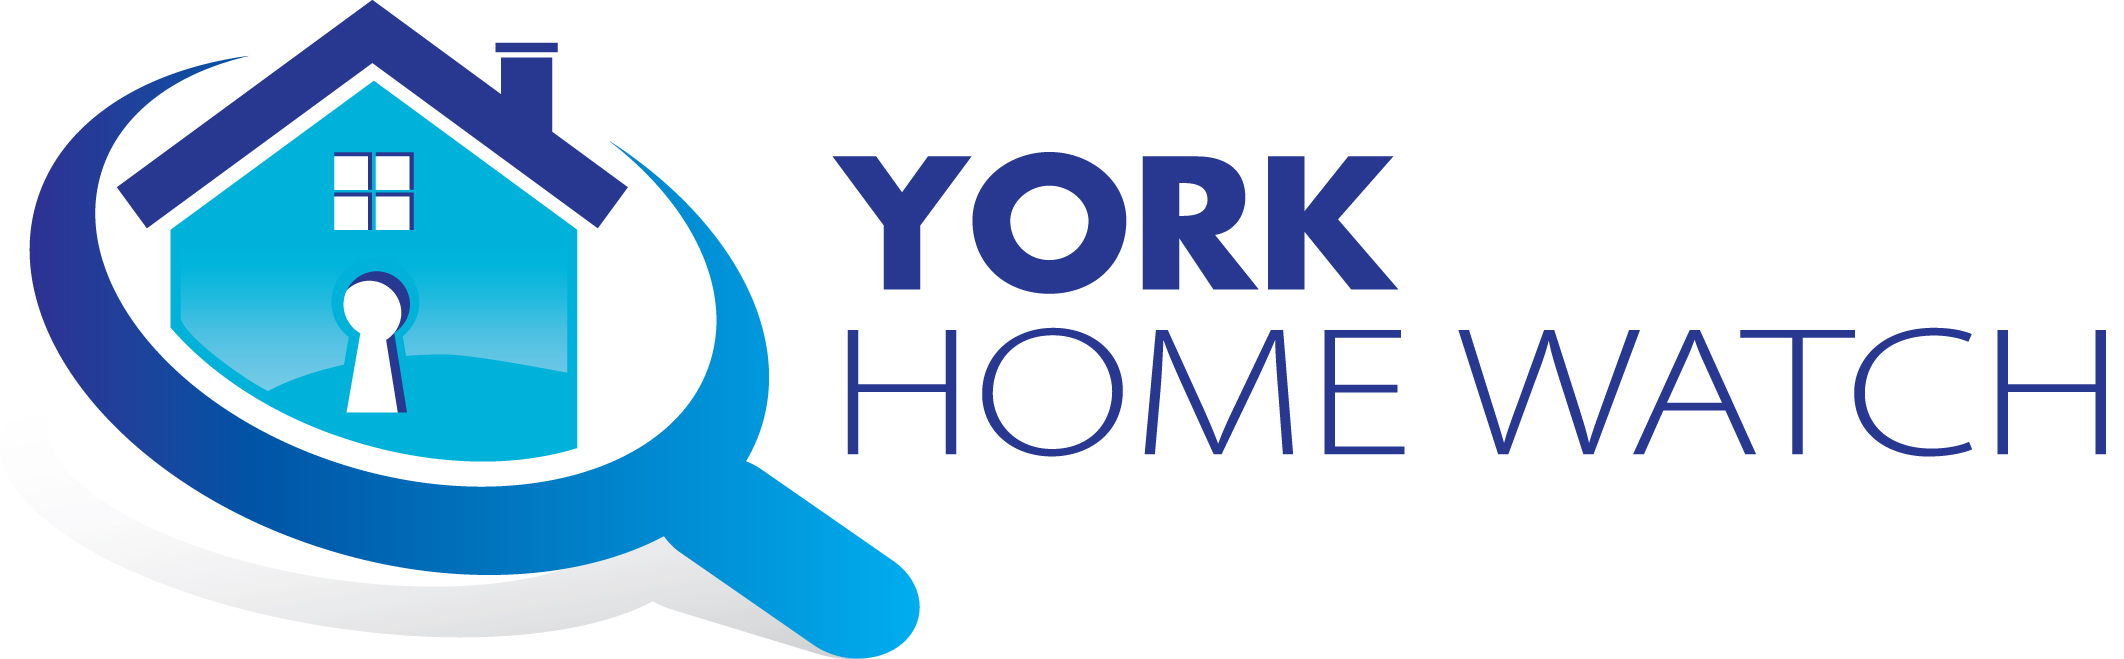 York Home Watch